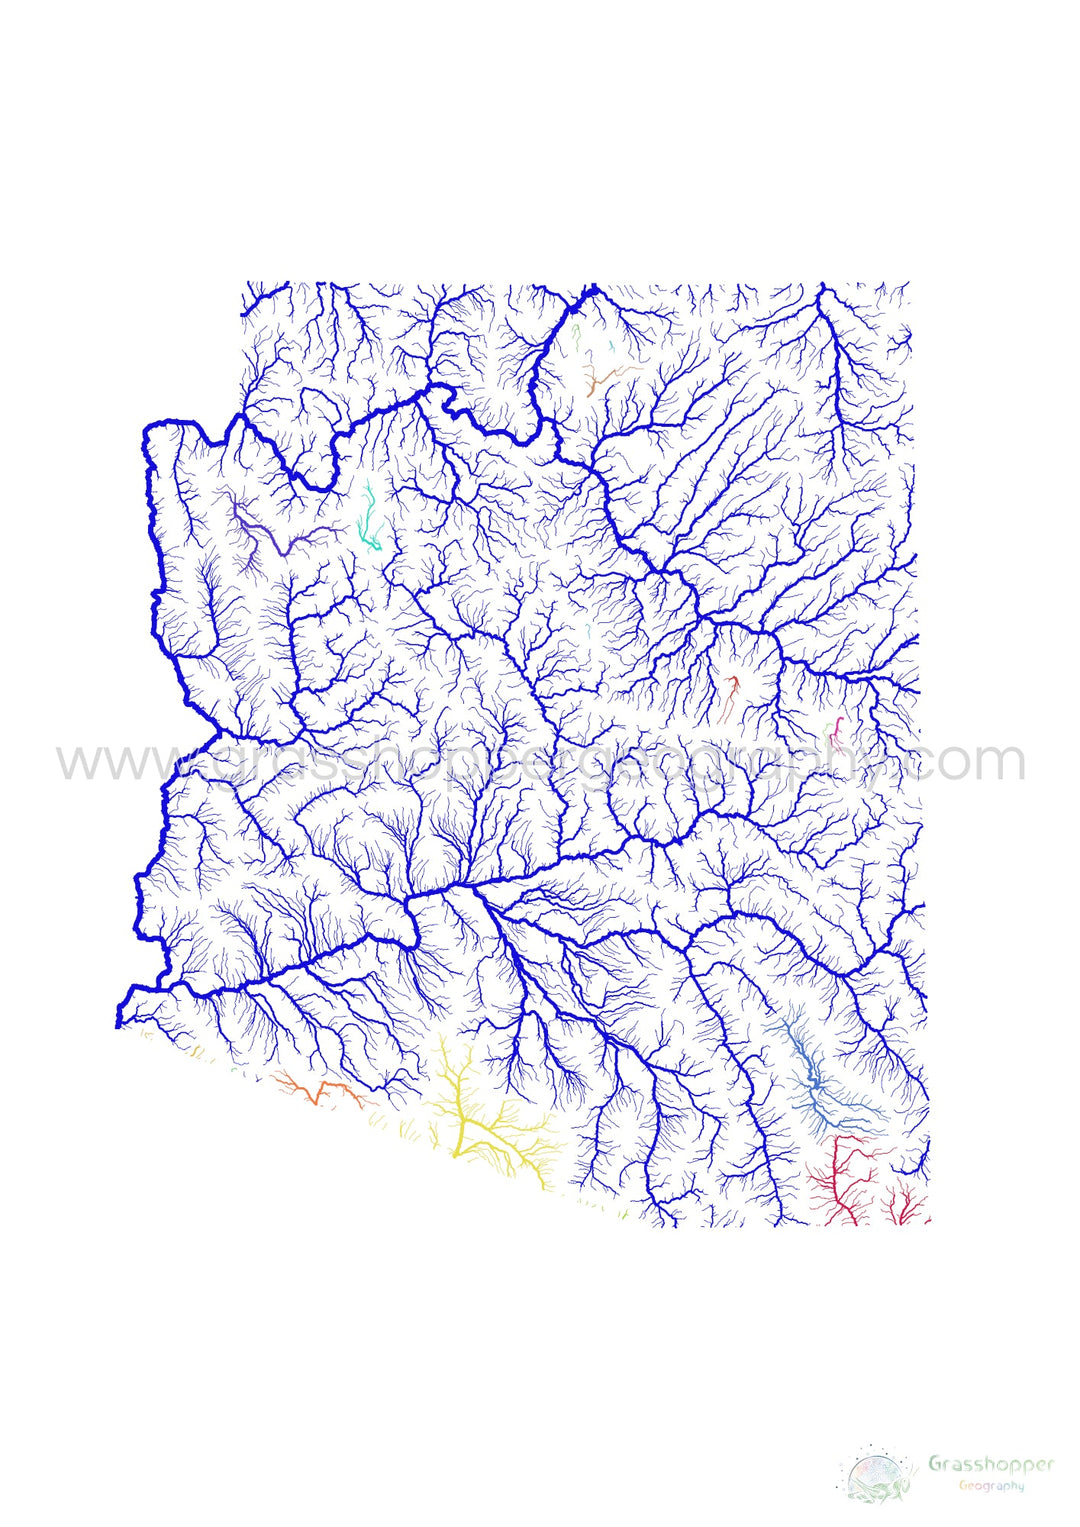 Arizona - Carte du bassin fluvial, arc-en-ciel sur blanc - Fine Art Print